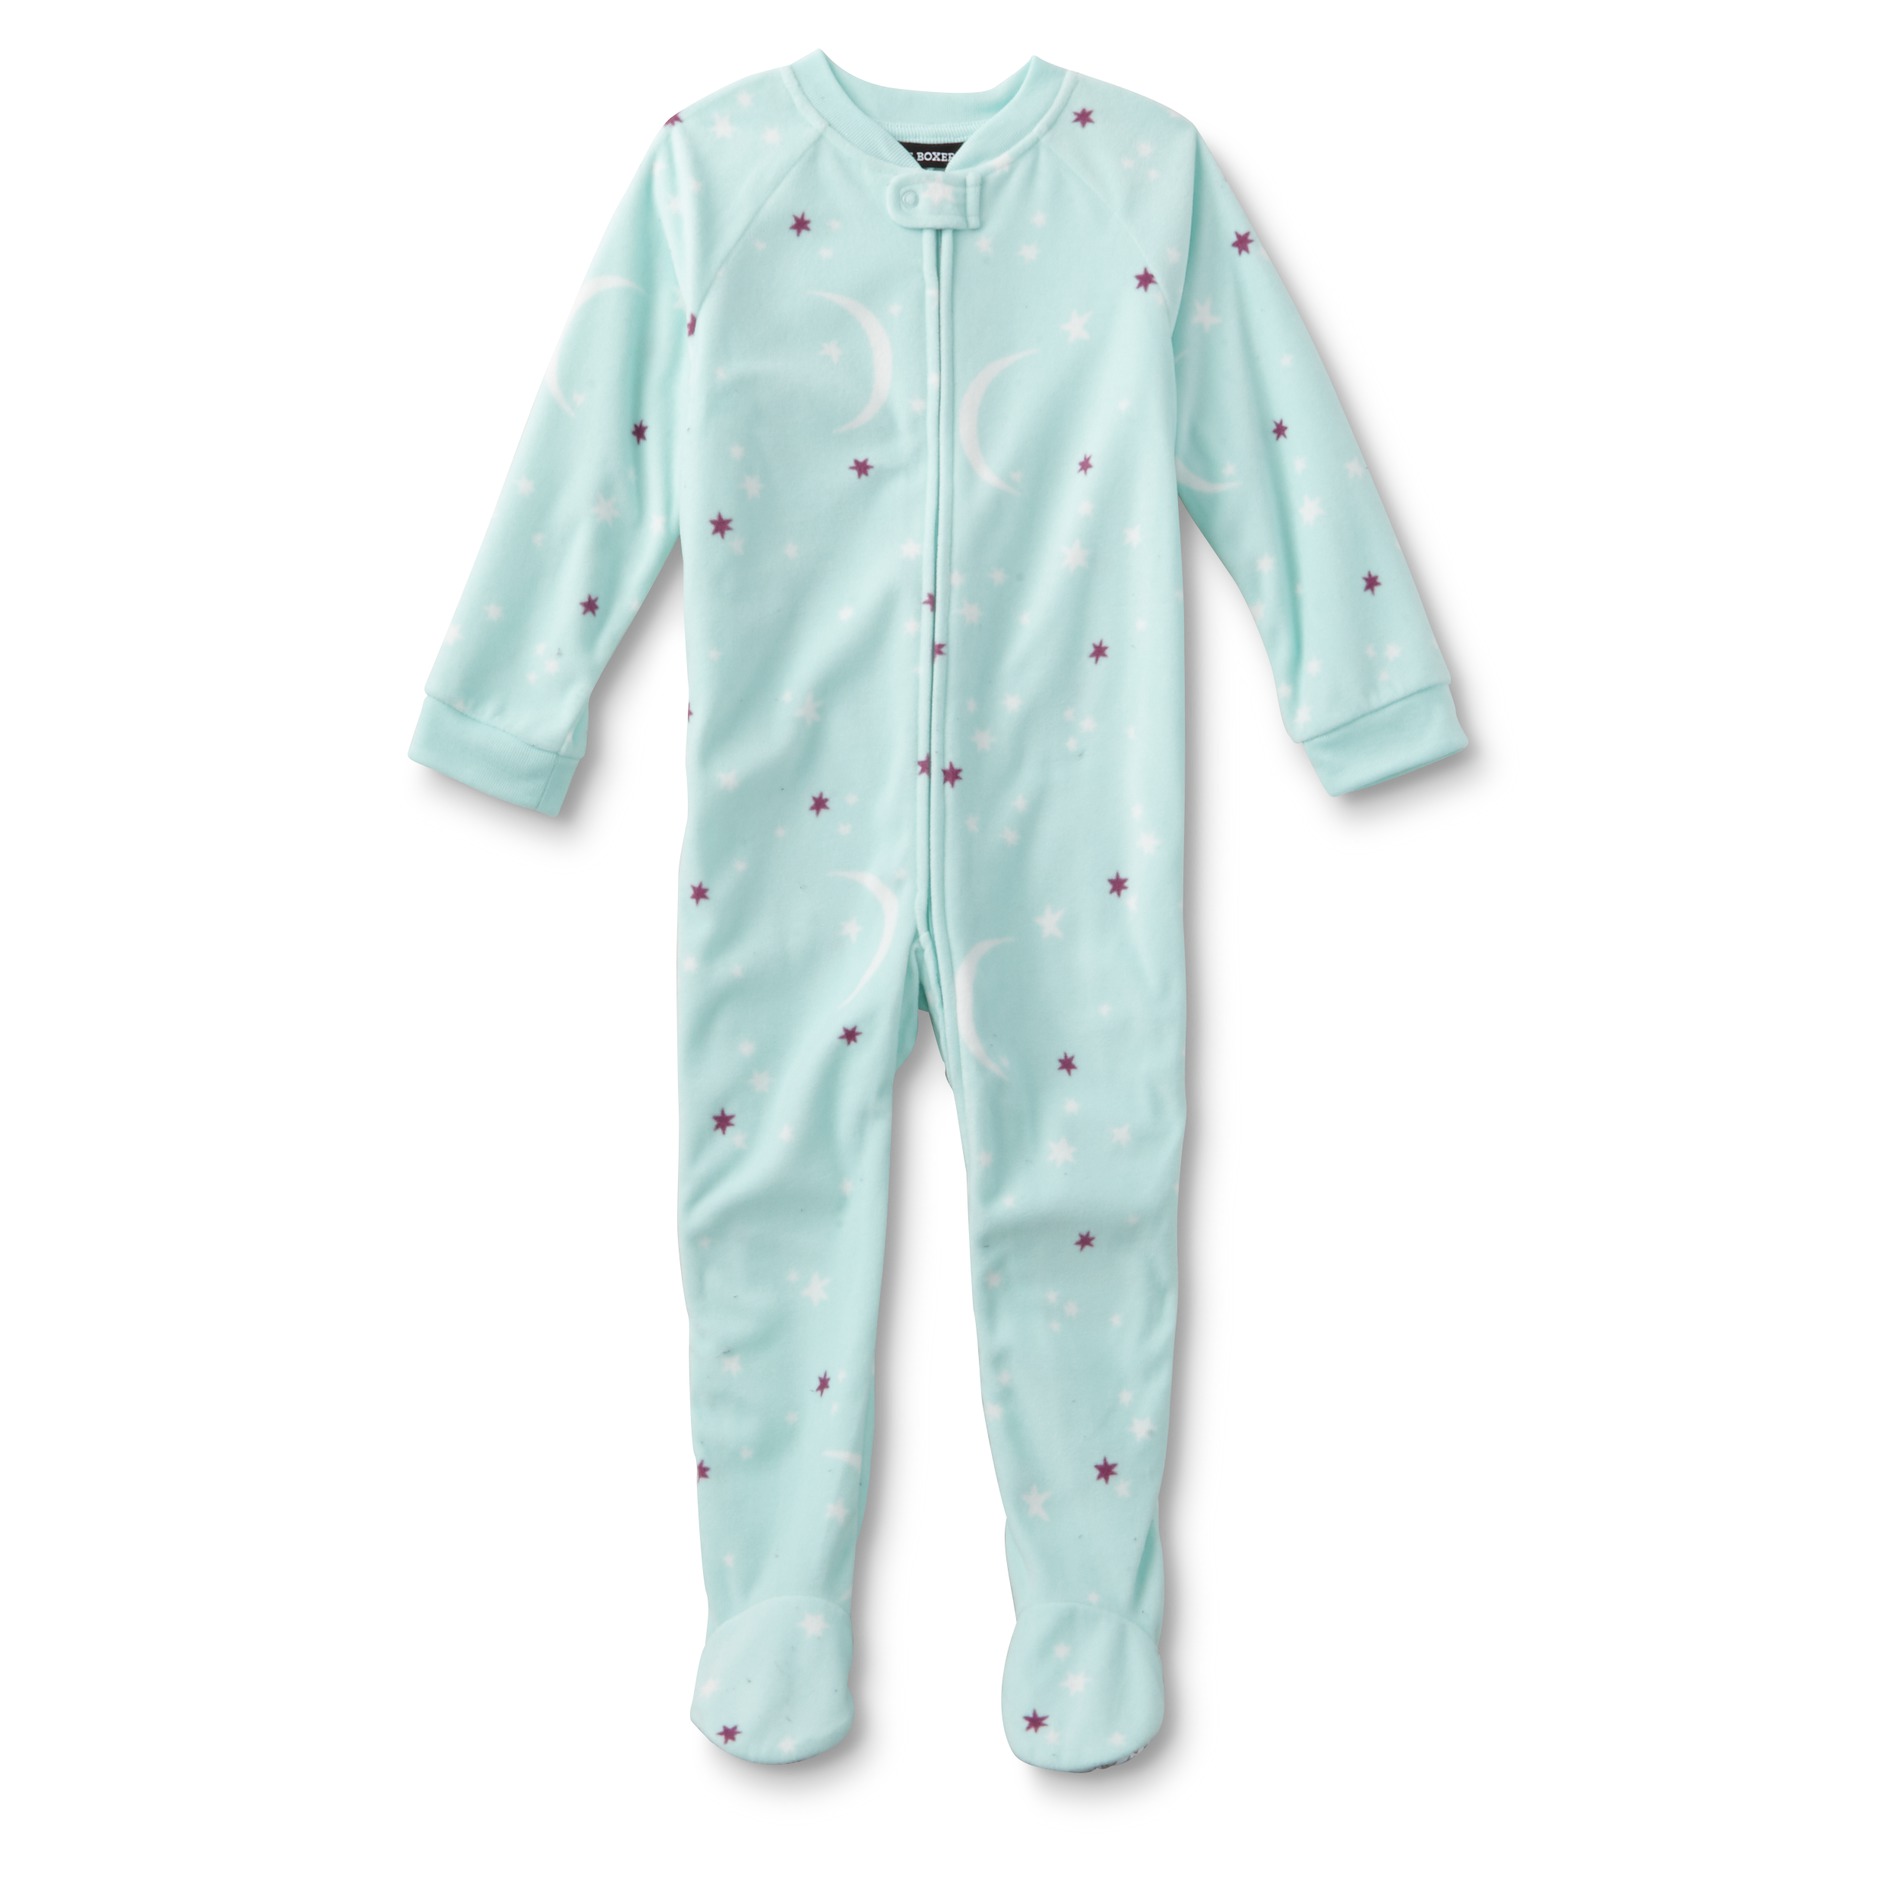 Joe Boxer Infant & Toddler Girl's Sleeper Pajamas - Moon